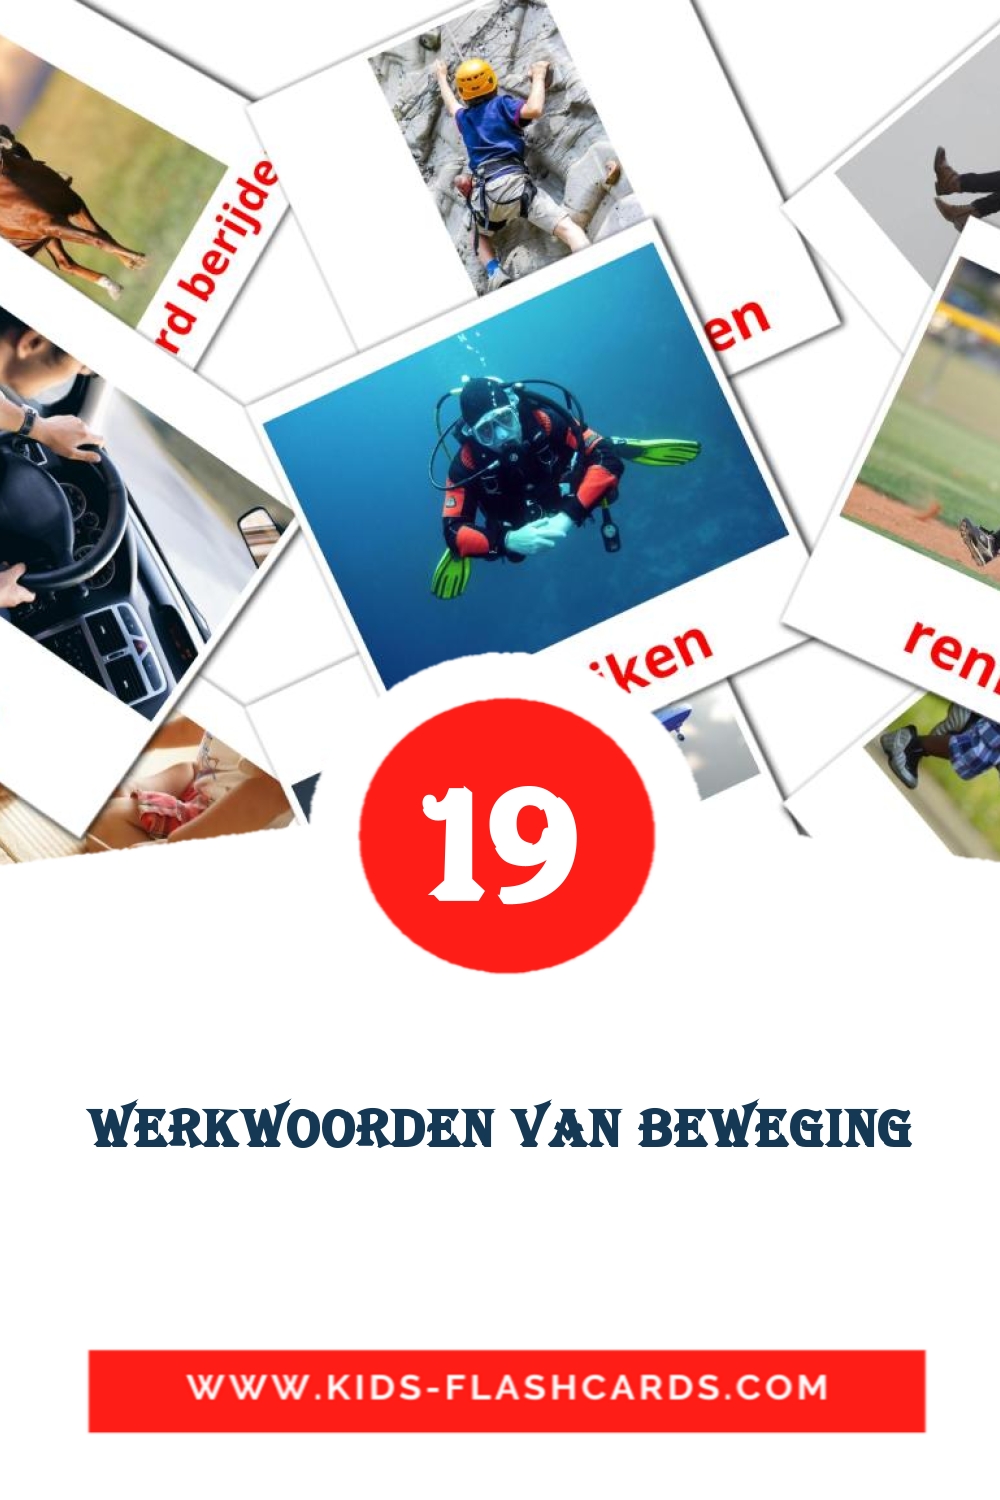 19 carte illustrate di Werkwoorden van beweging per la scuola materna in olandese